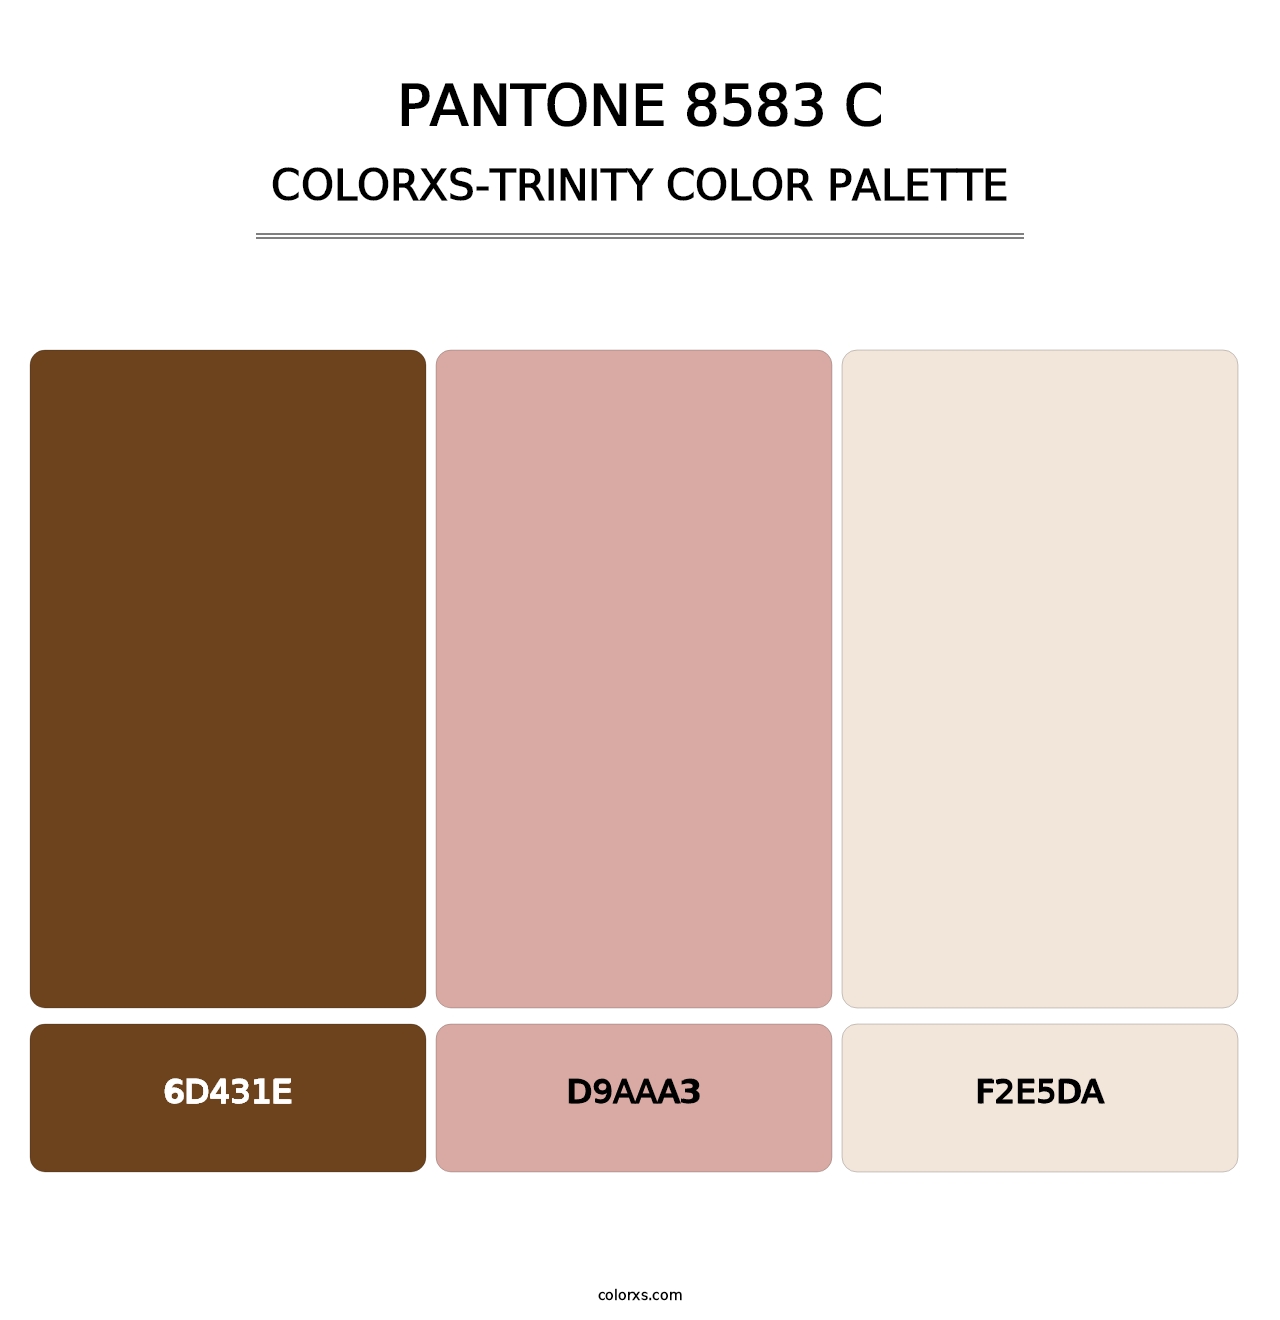 PANTONE 8583 C - Colorxs Trinity Palette